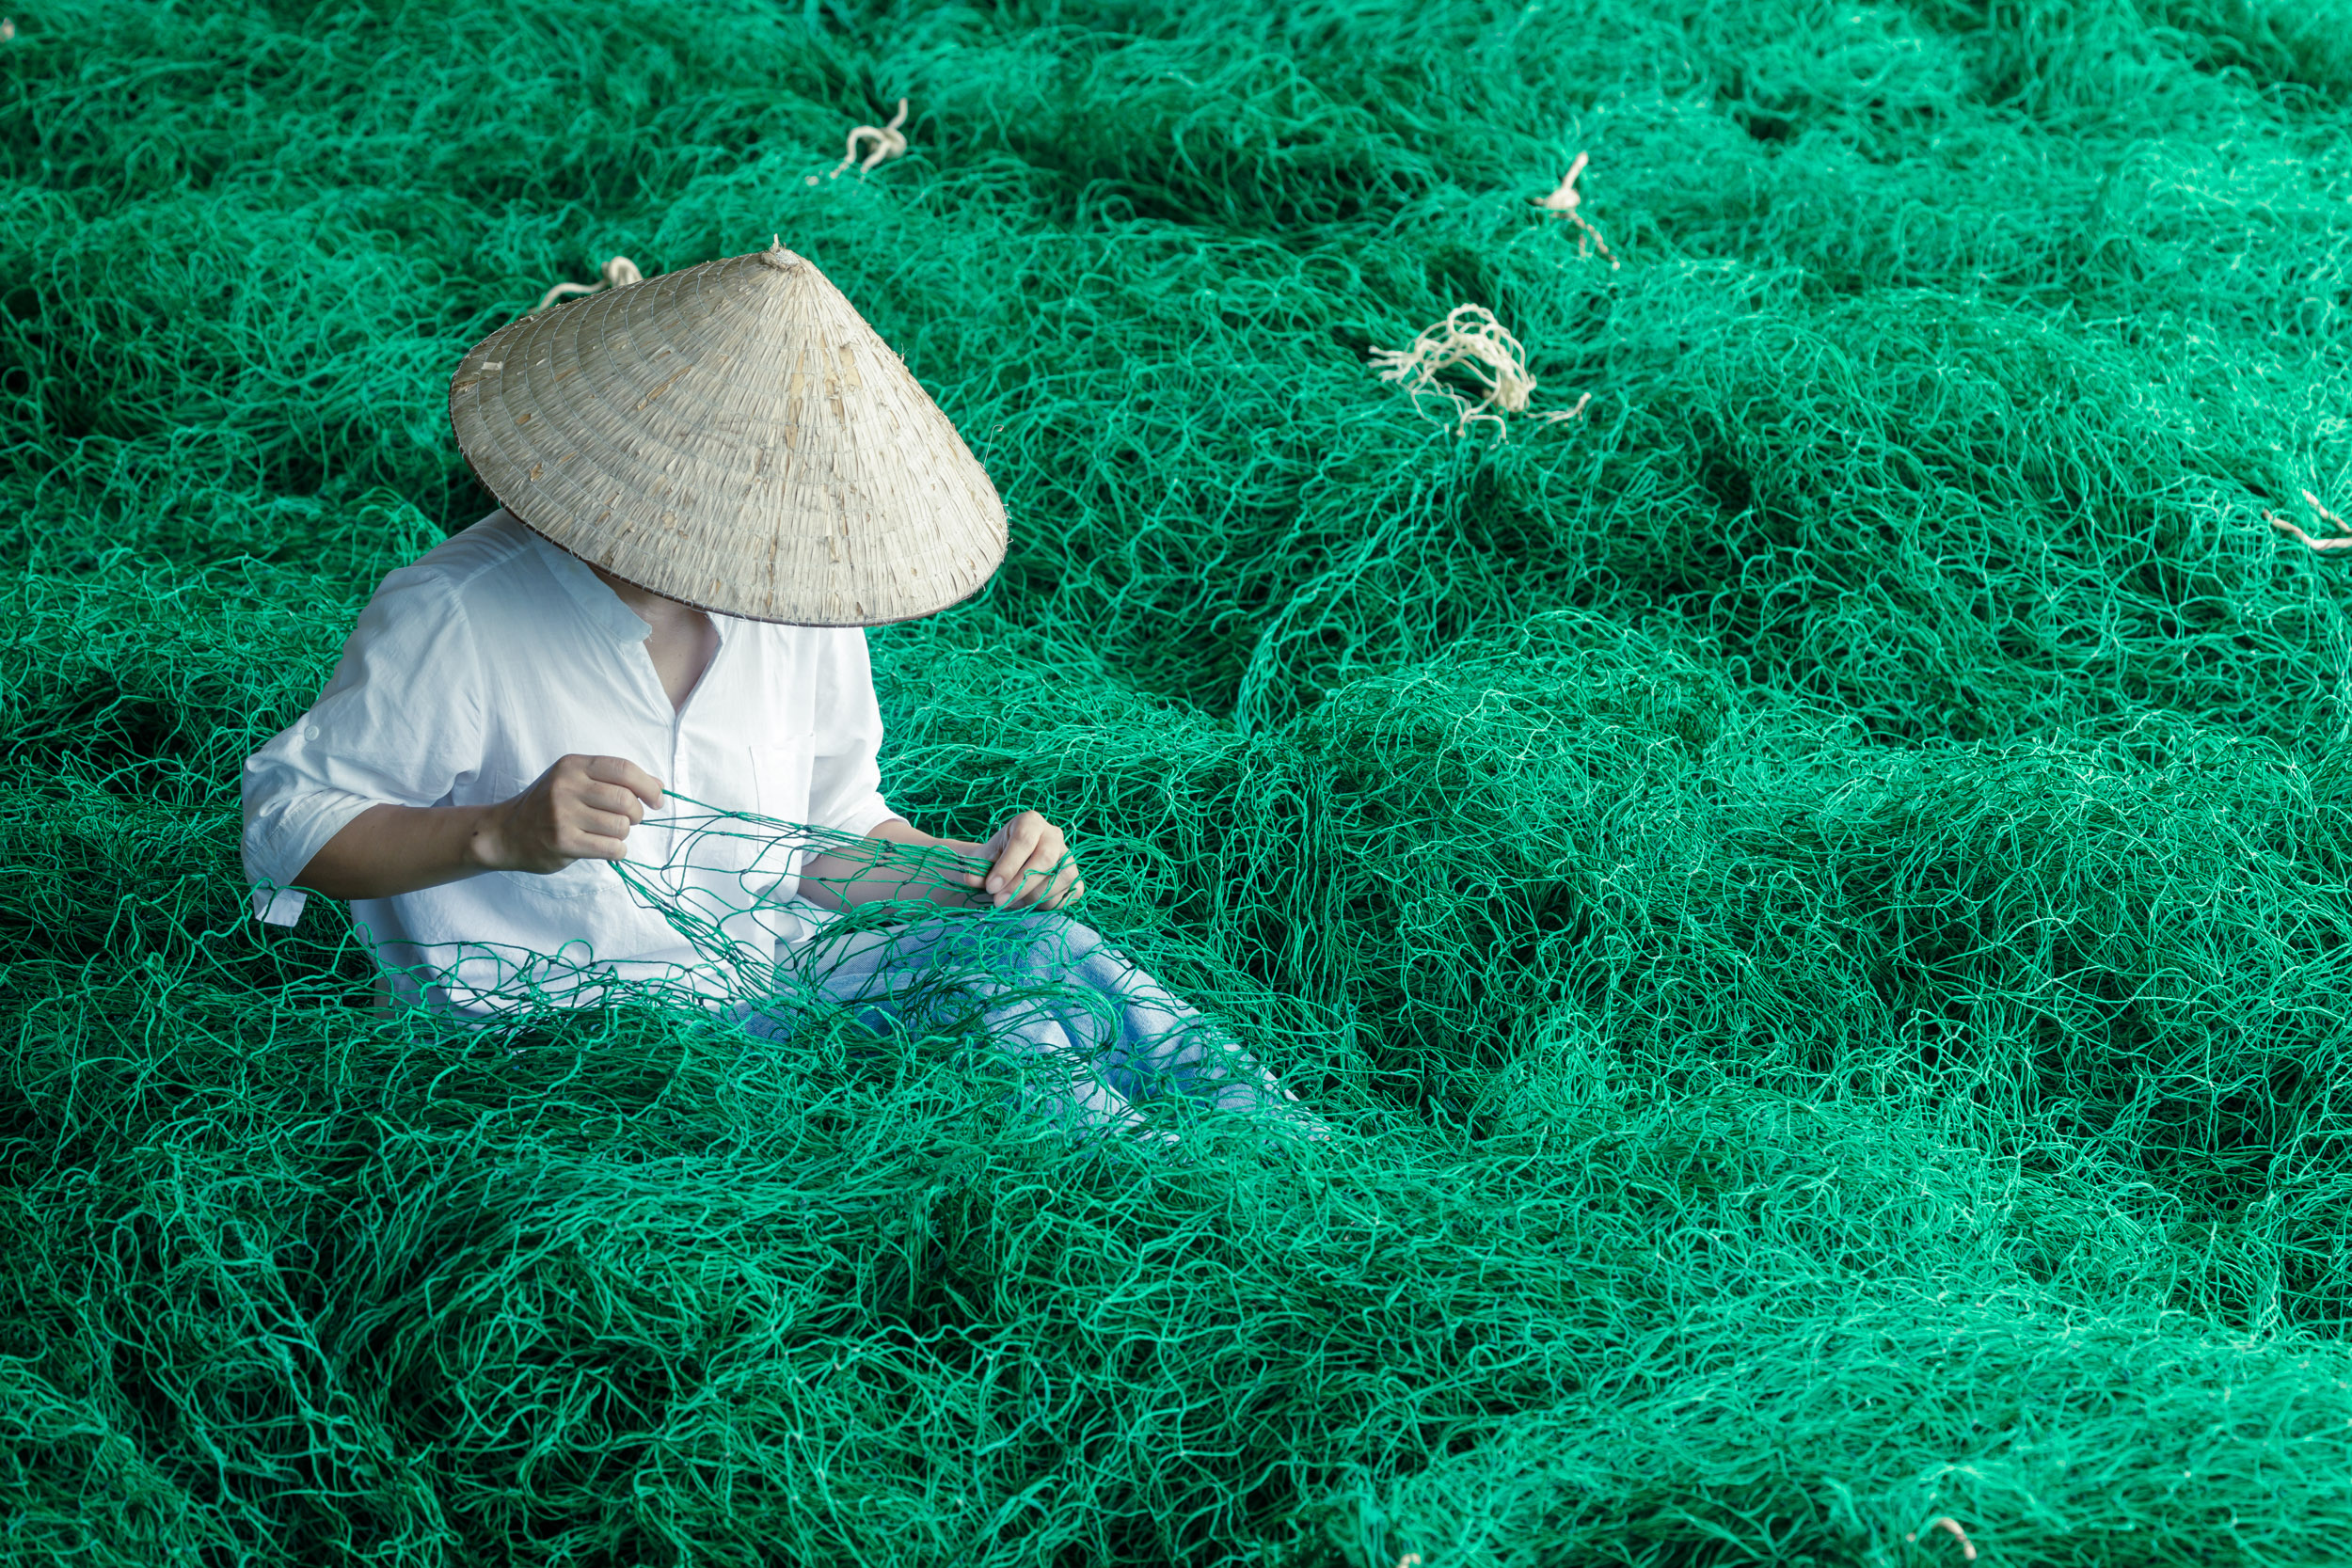 A young woman mending fishing nets in Vietnam.